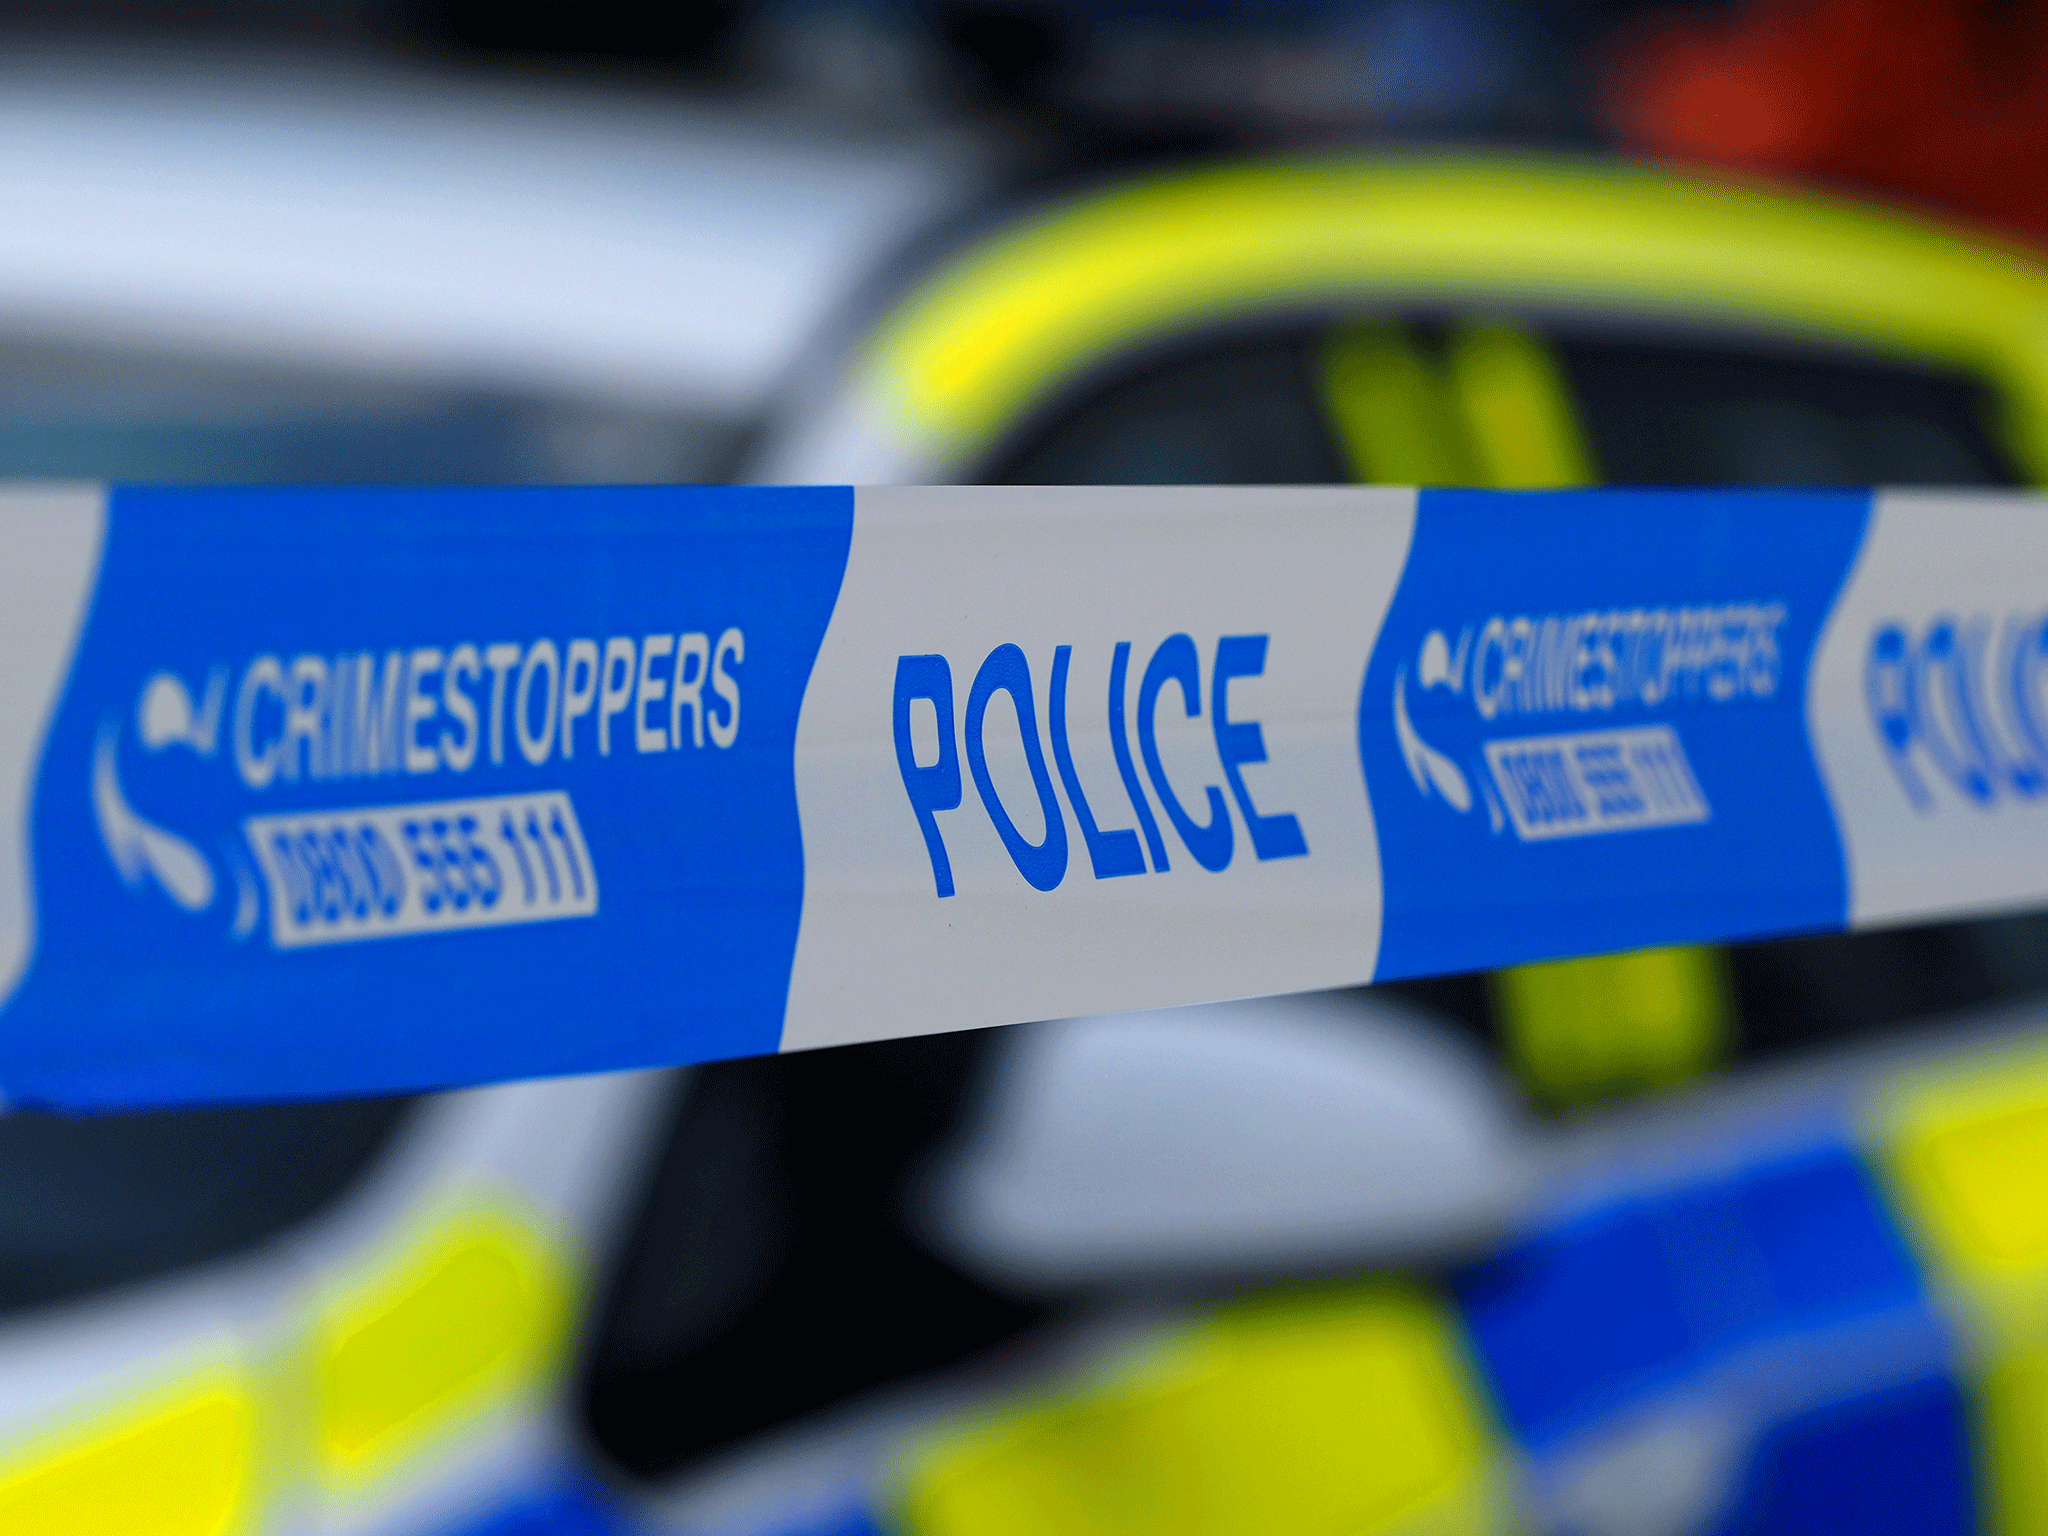 The crash happened on a main road passing GCHQ's headquarters in Cheltenham